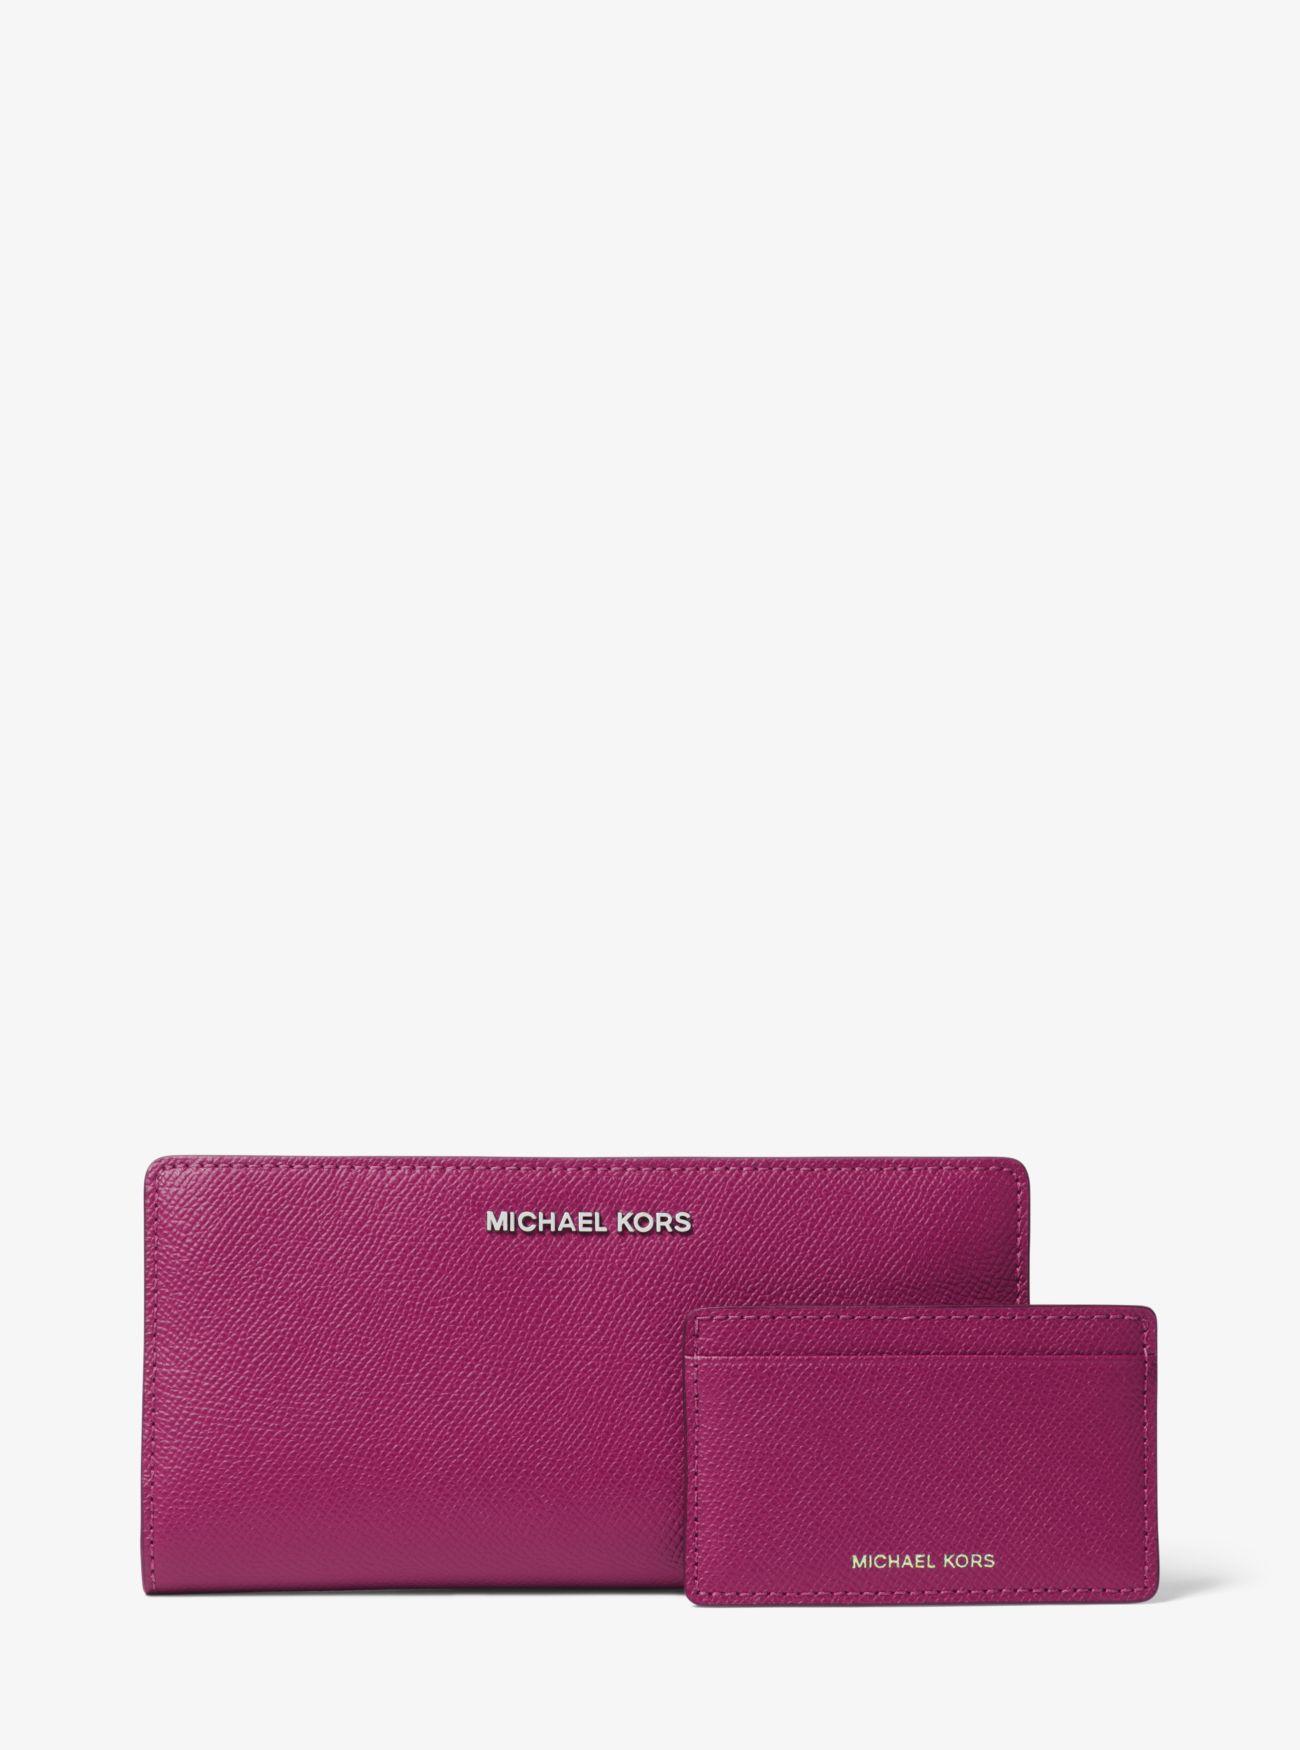 michael kors thin wallet